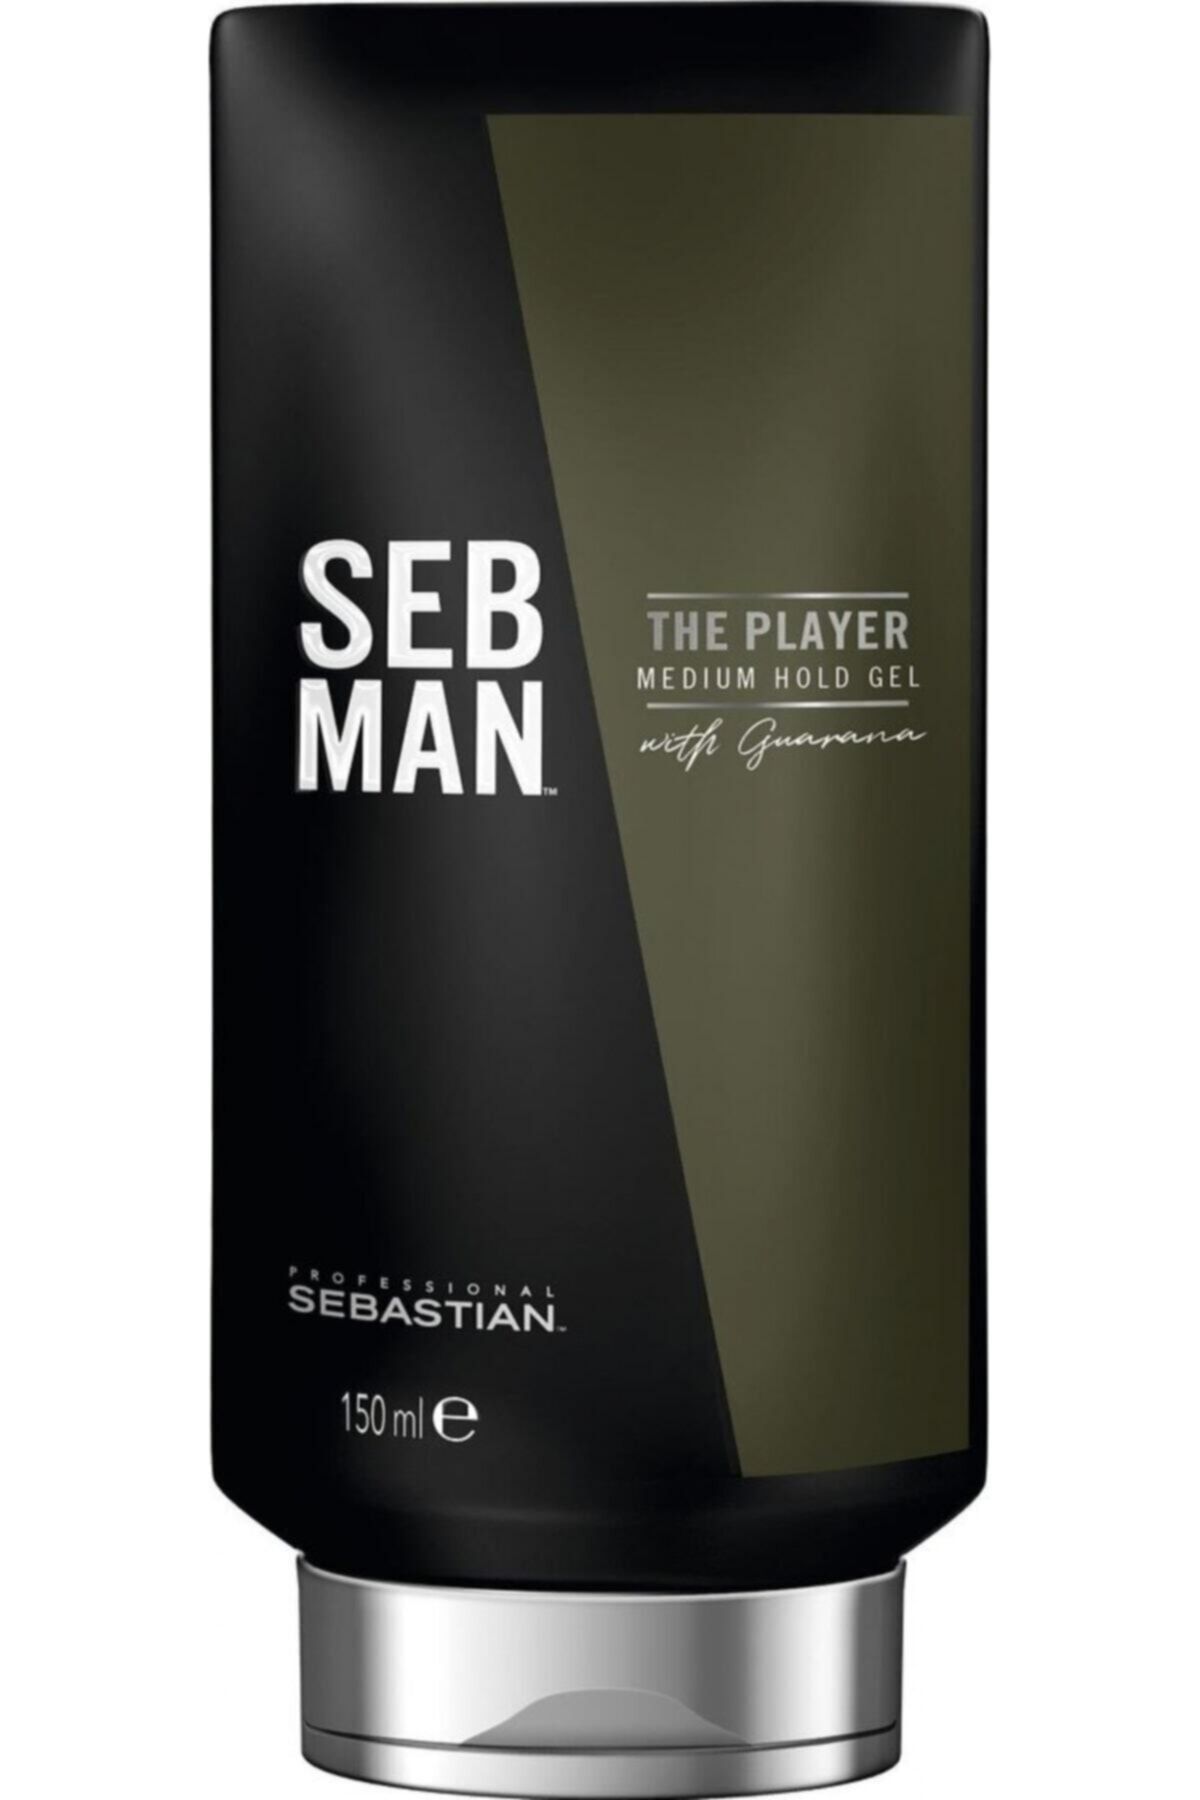 Sebastian Seb Man The Player Medium Hold Gel 150ml …key Jöle13